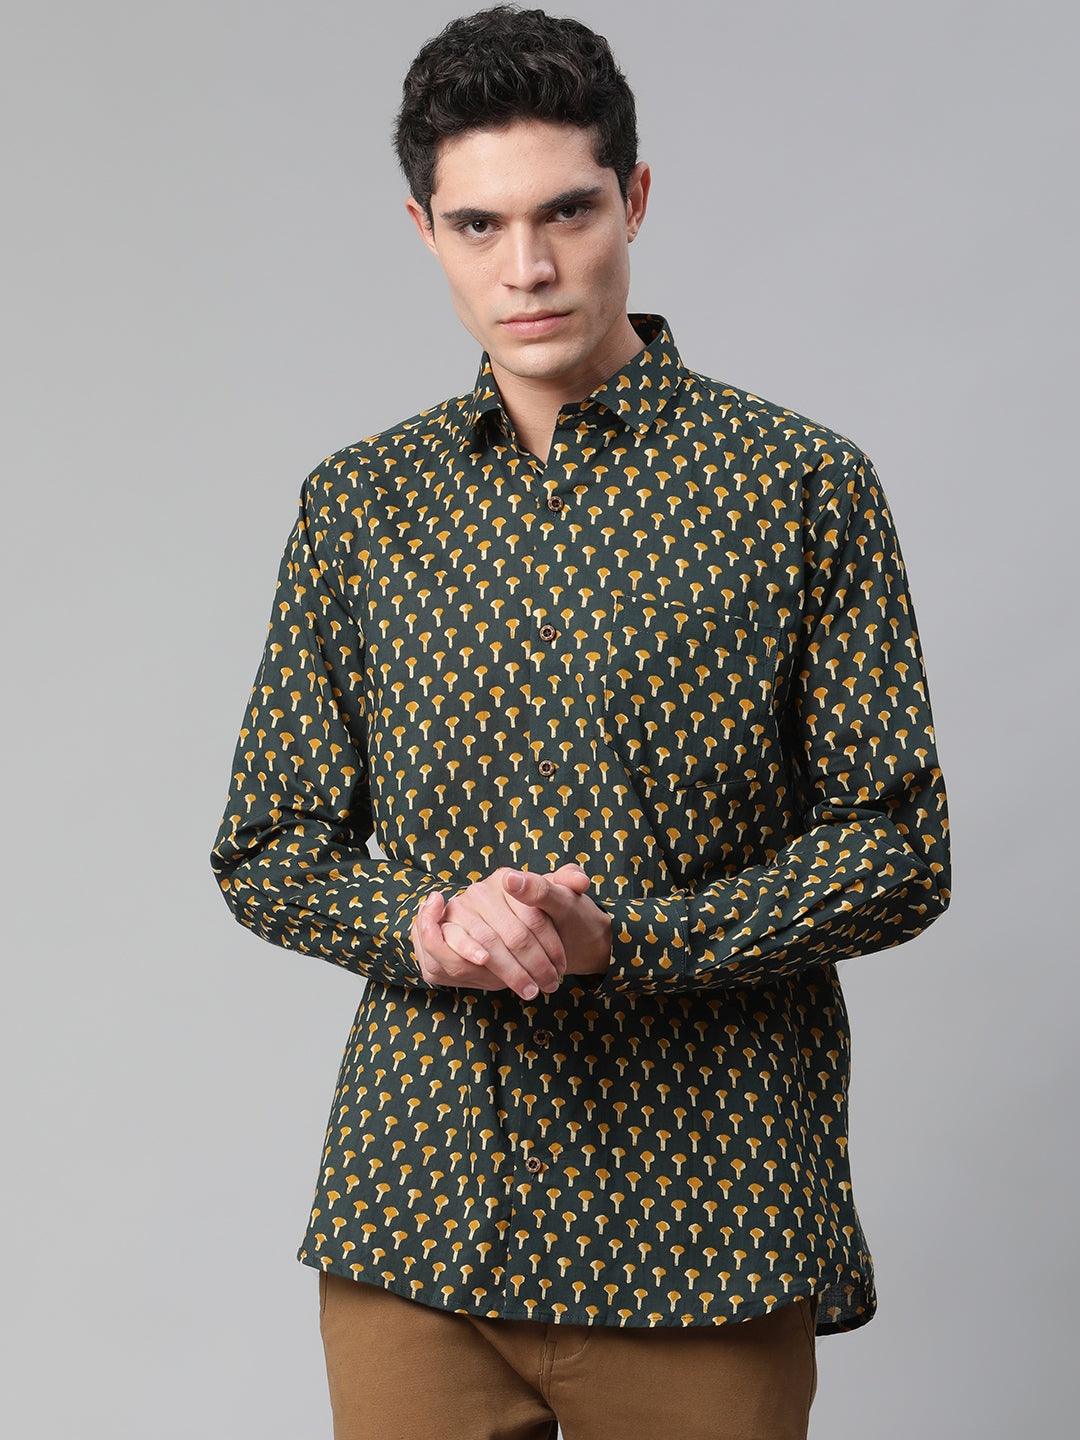 Millennial Men Dark Green  & Mustard Cotton  Full Sleeve  Shirt for Men-MMF0284 - divenaworld.com